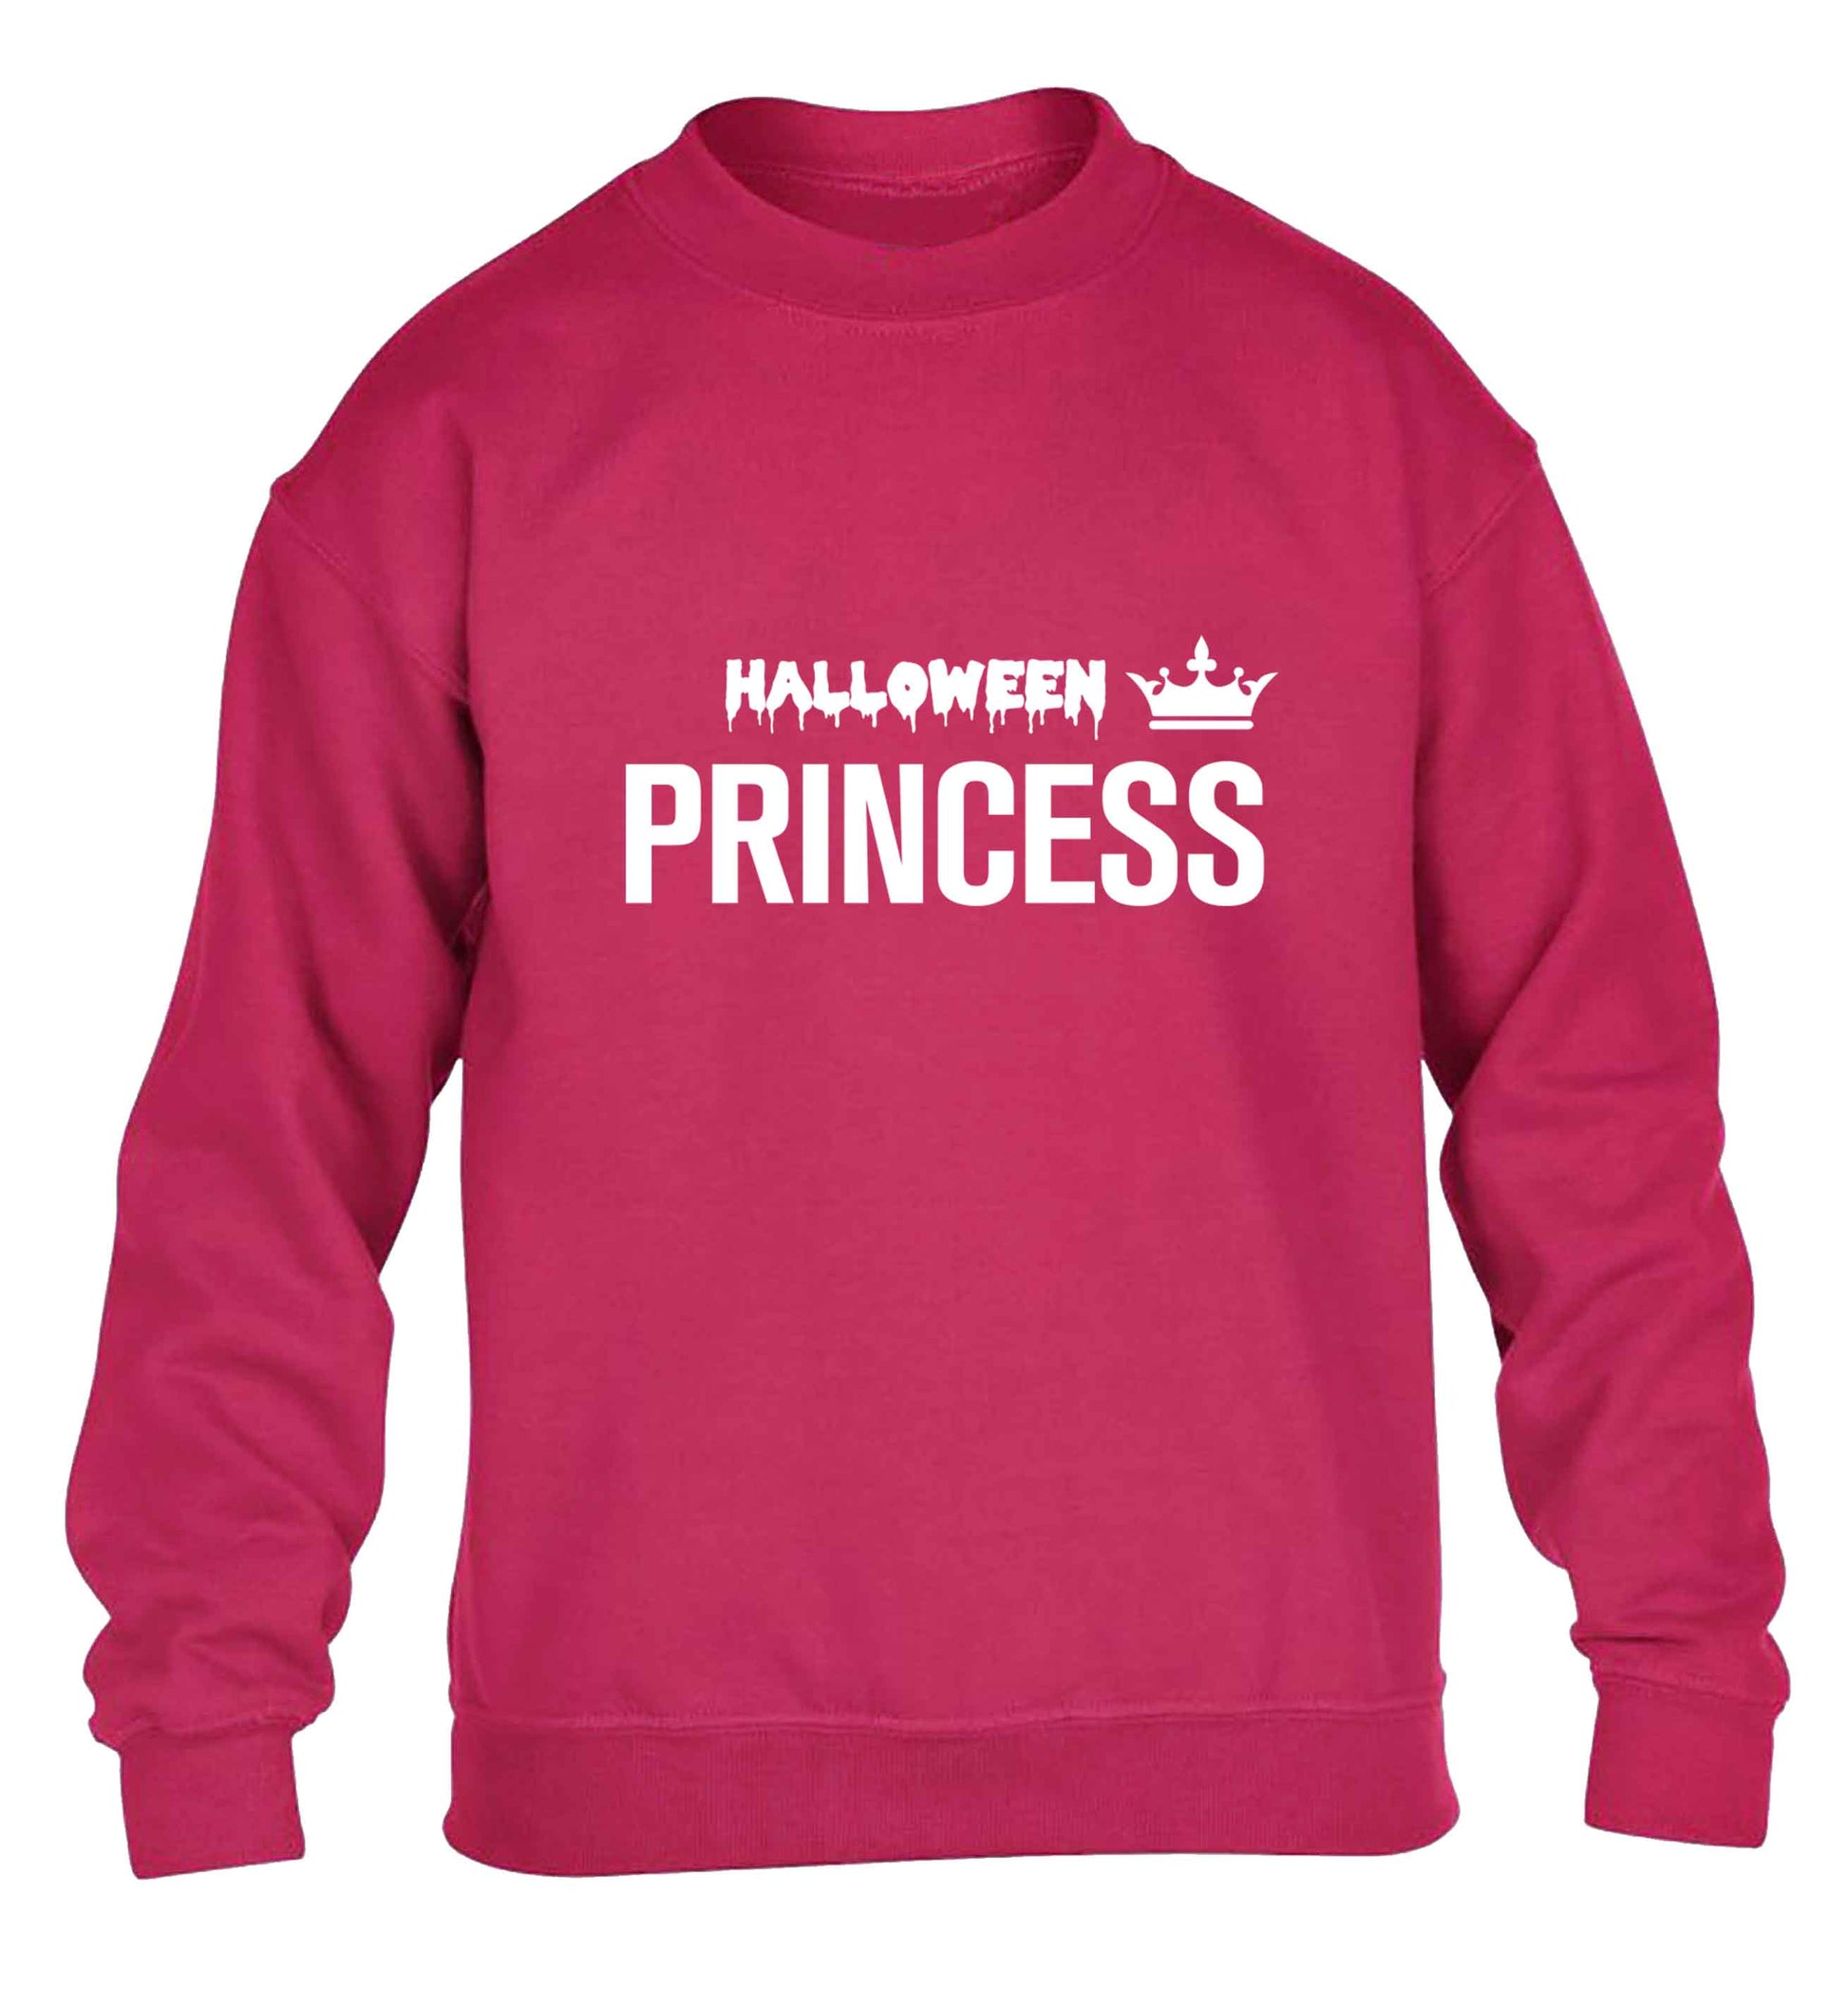 Halloween princess children's pink sweater 12-13 Years